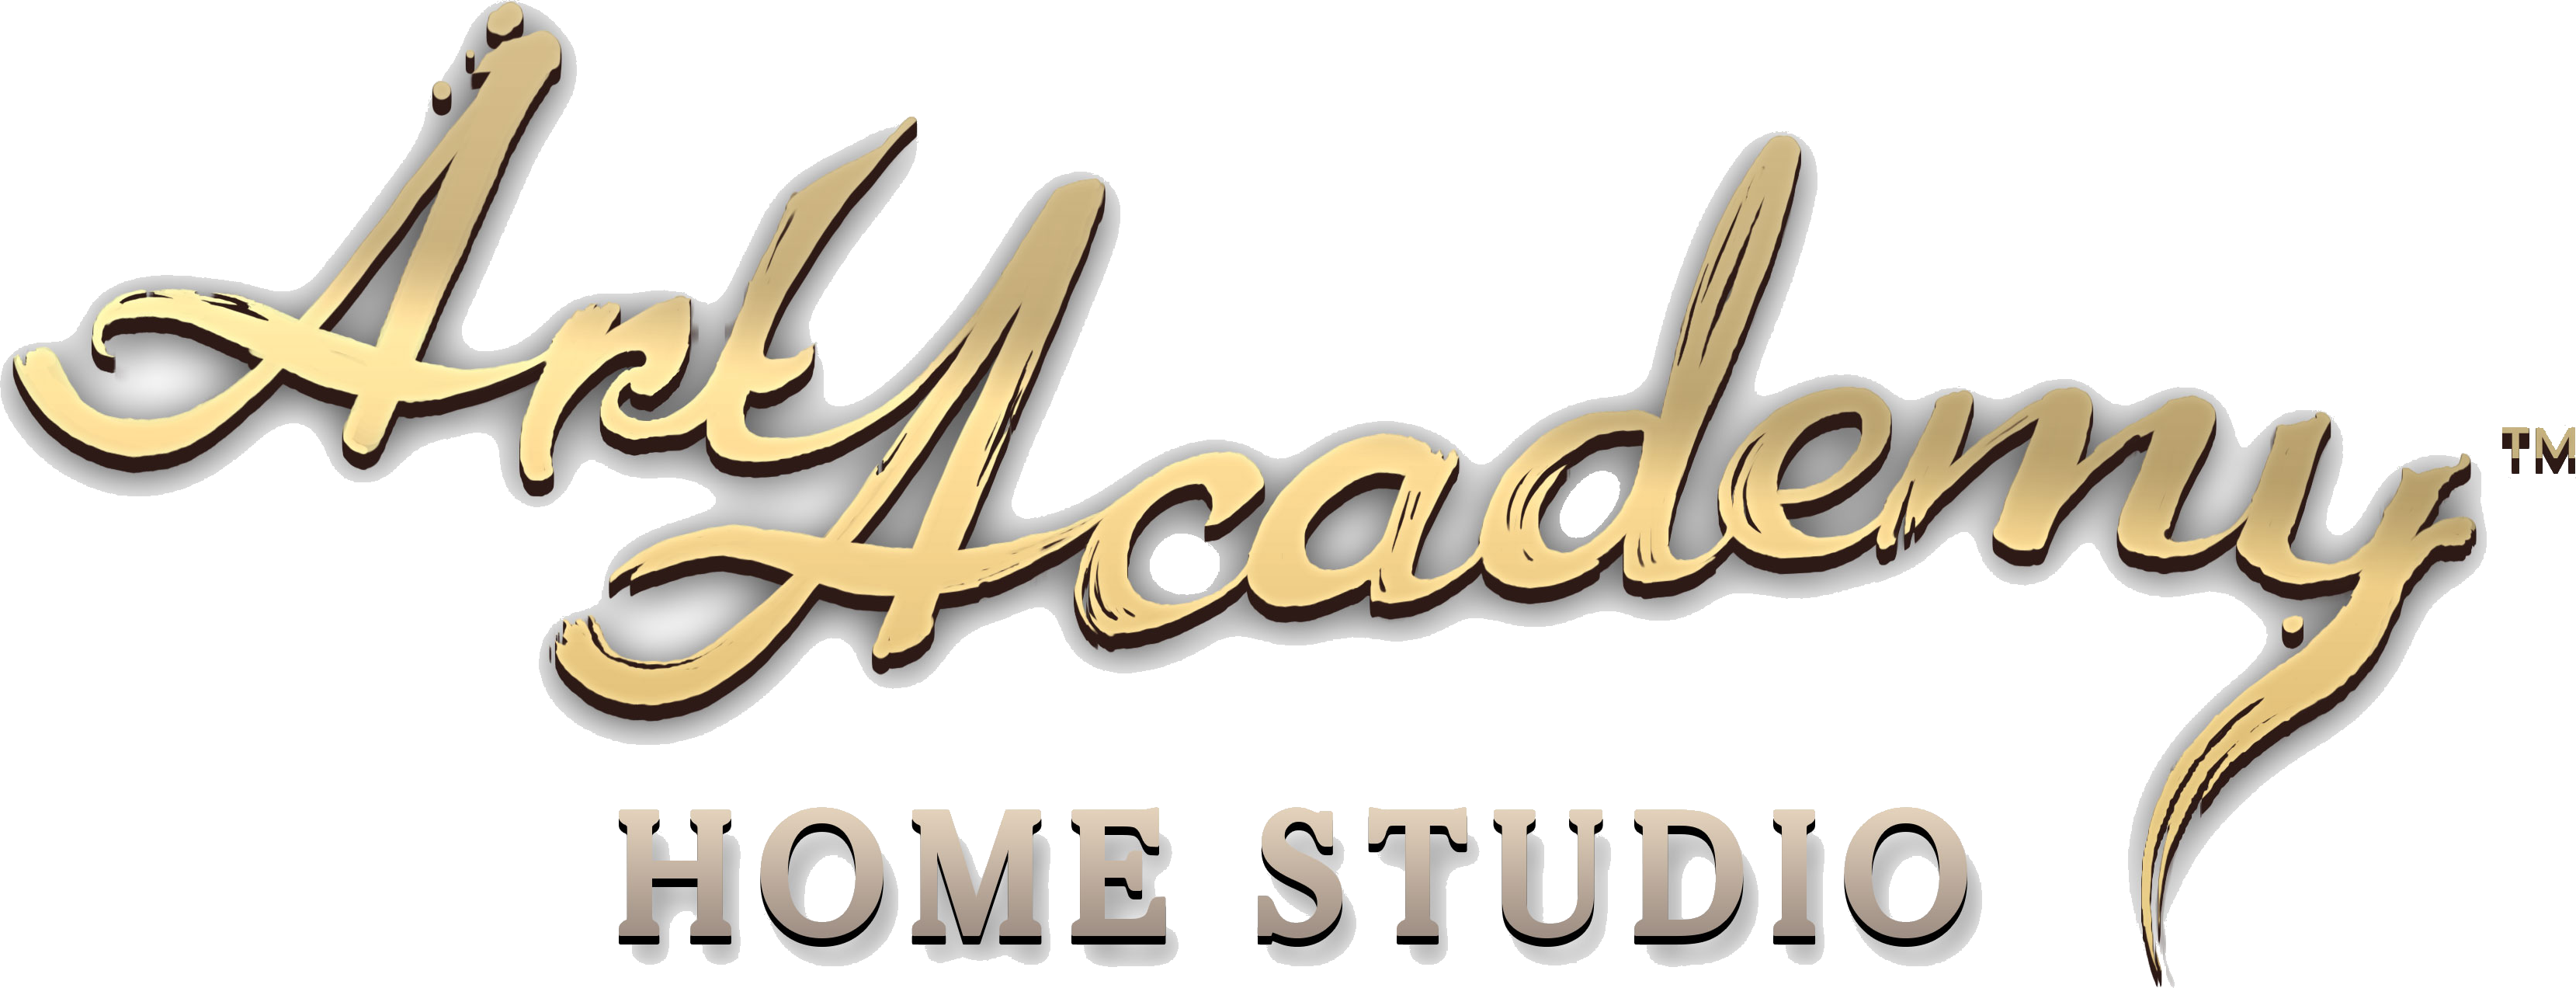 Art Academy: Home Studio - SteamGridDB